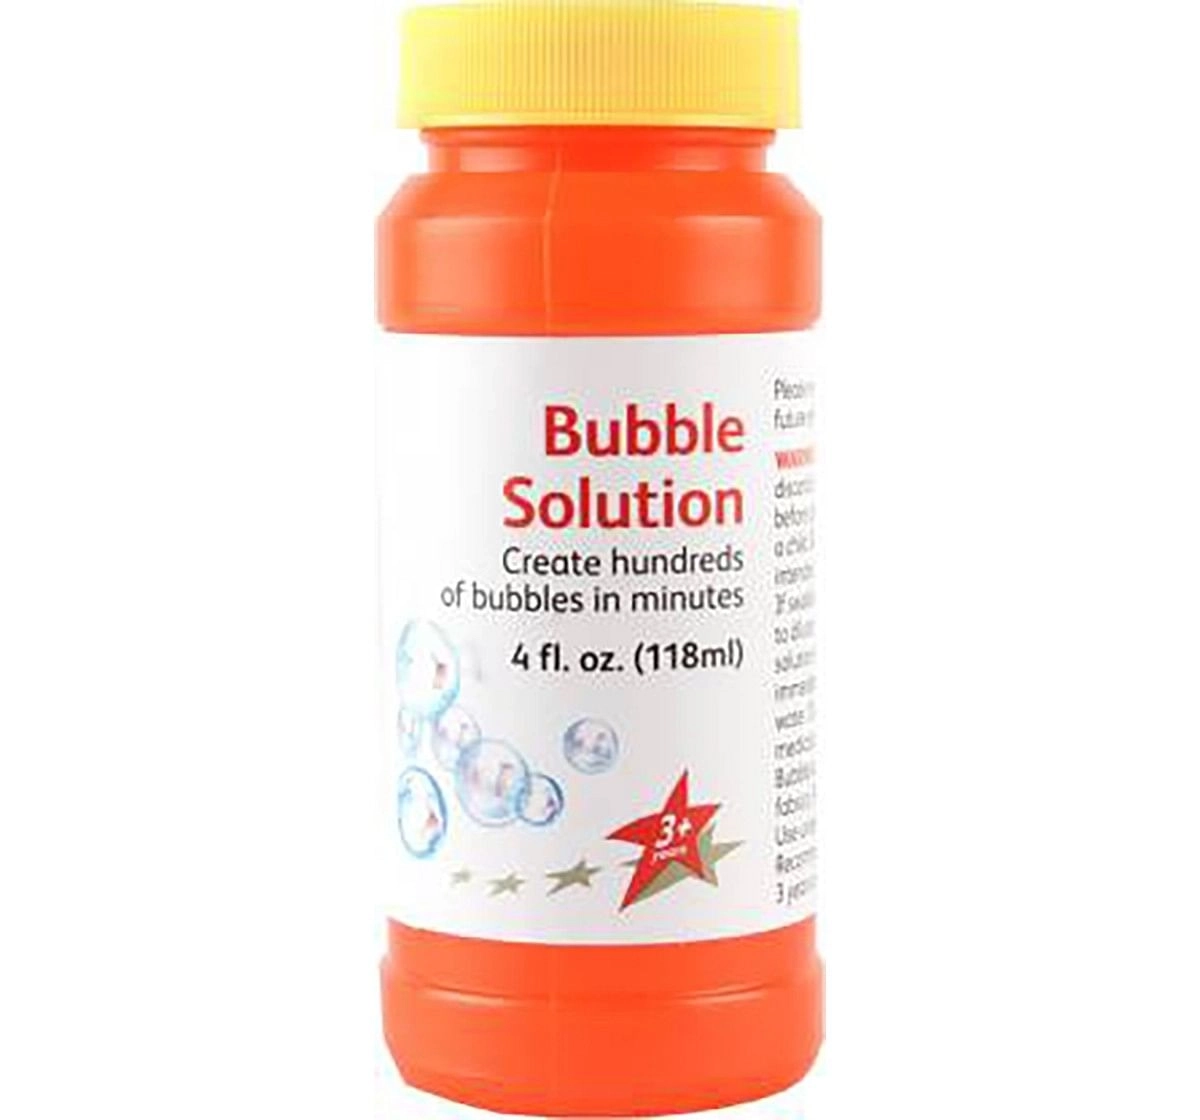  Rainbow Bubbles Bubble Mower Friction Impulse Toys for Kids age 3Y+ 